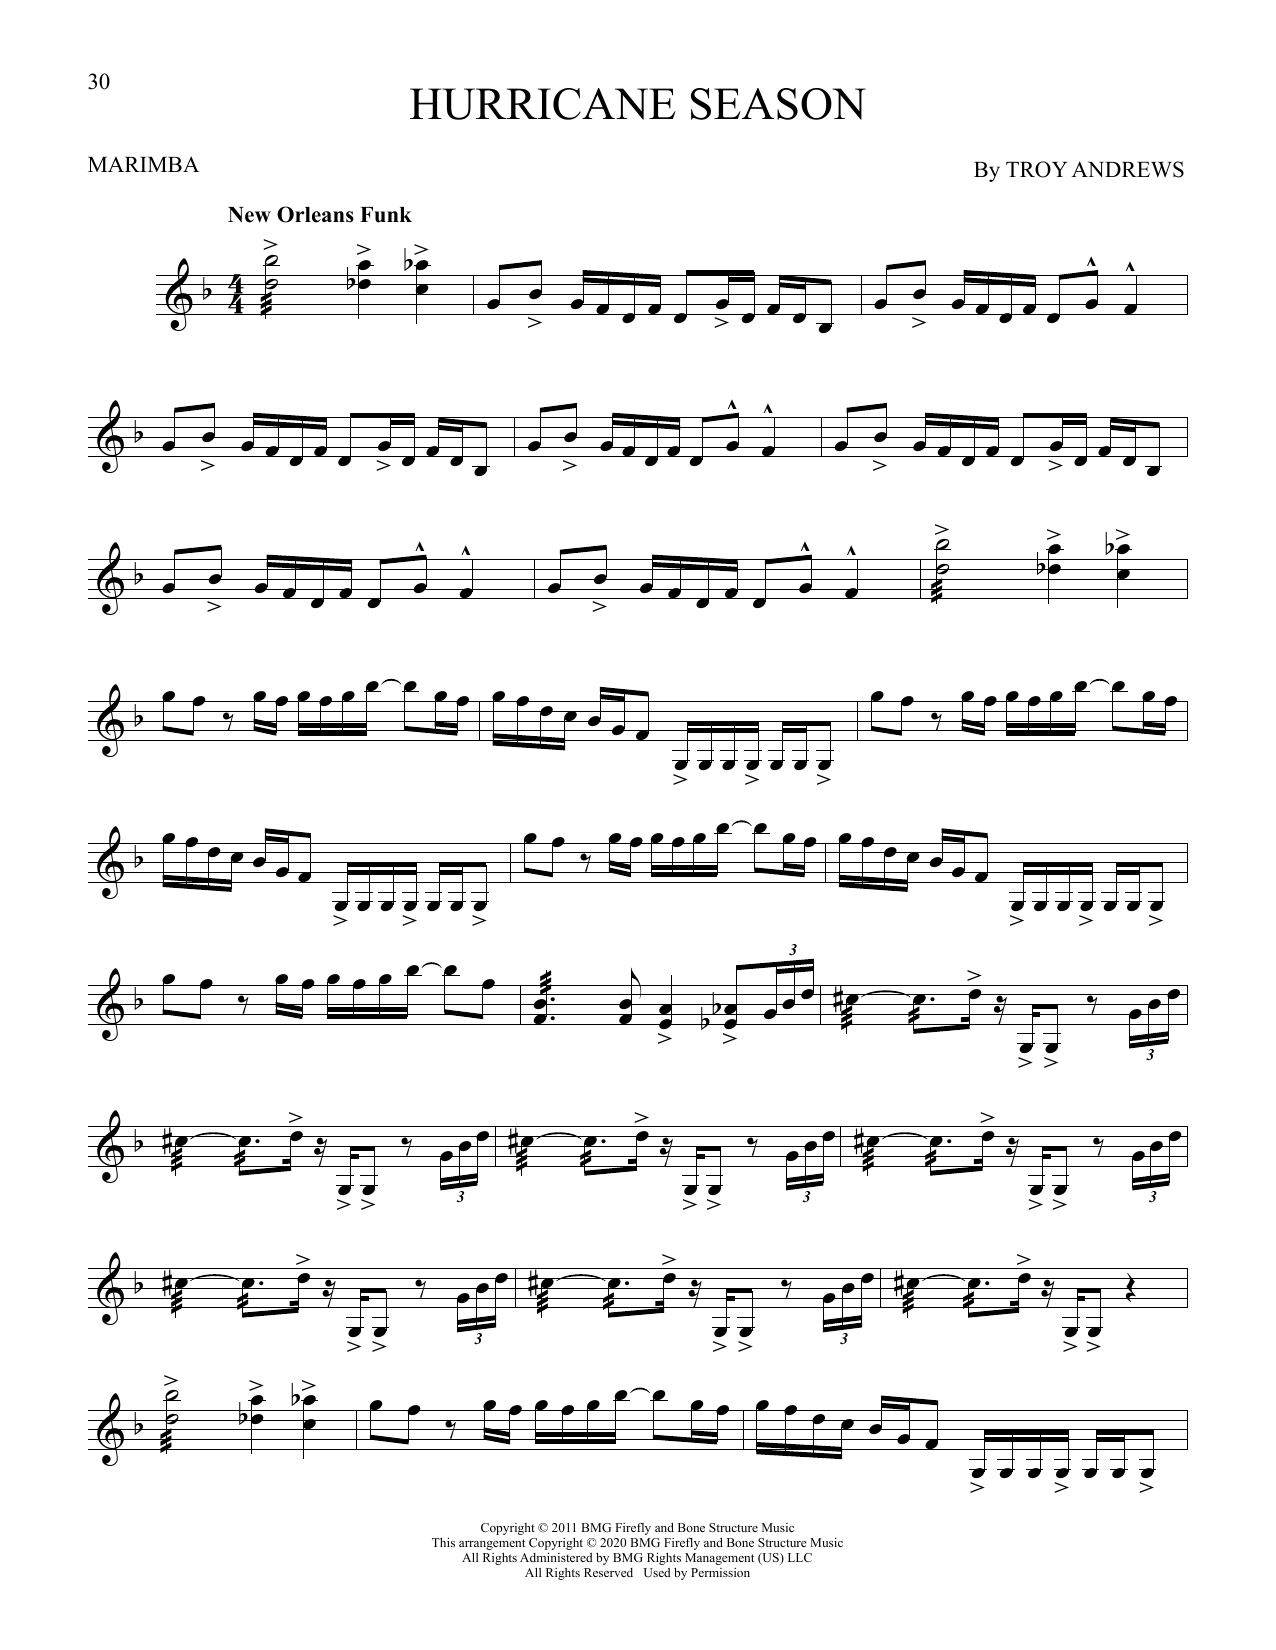 Trombone Shorty Hurricane Season Sheet Music Notes & Chords for Marimba Solo - Download or Print PDF